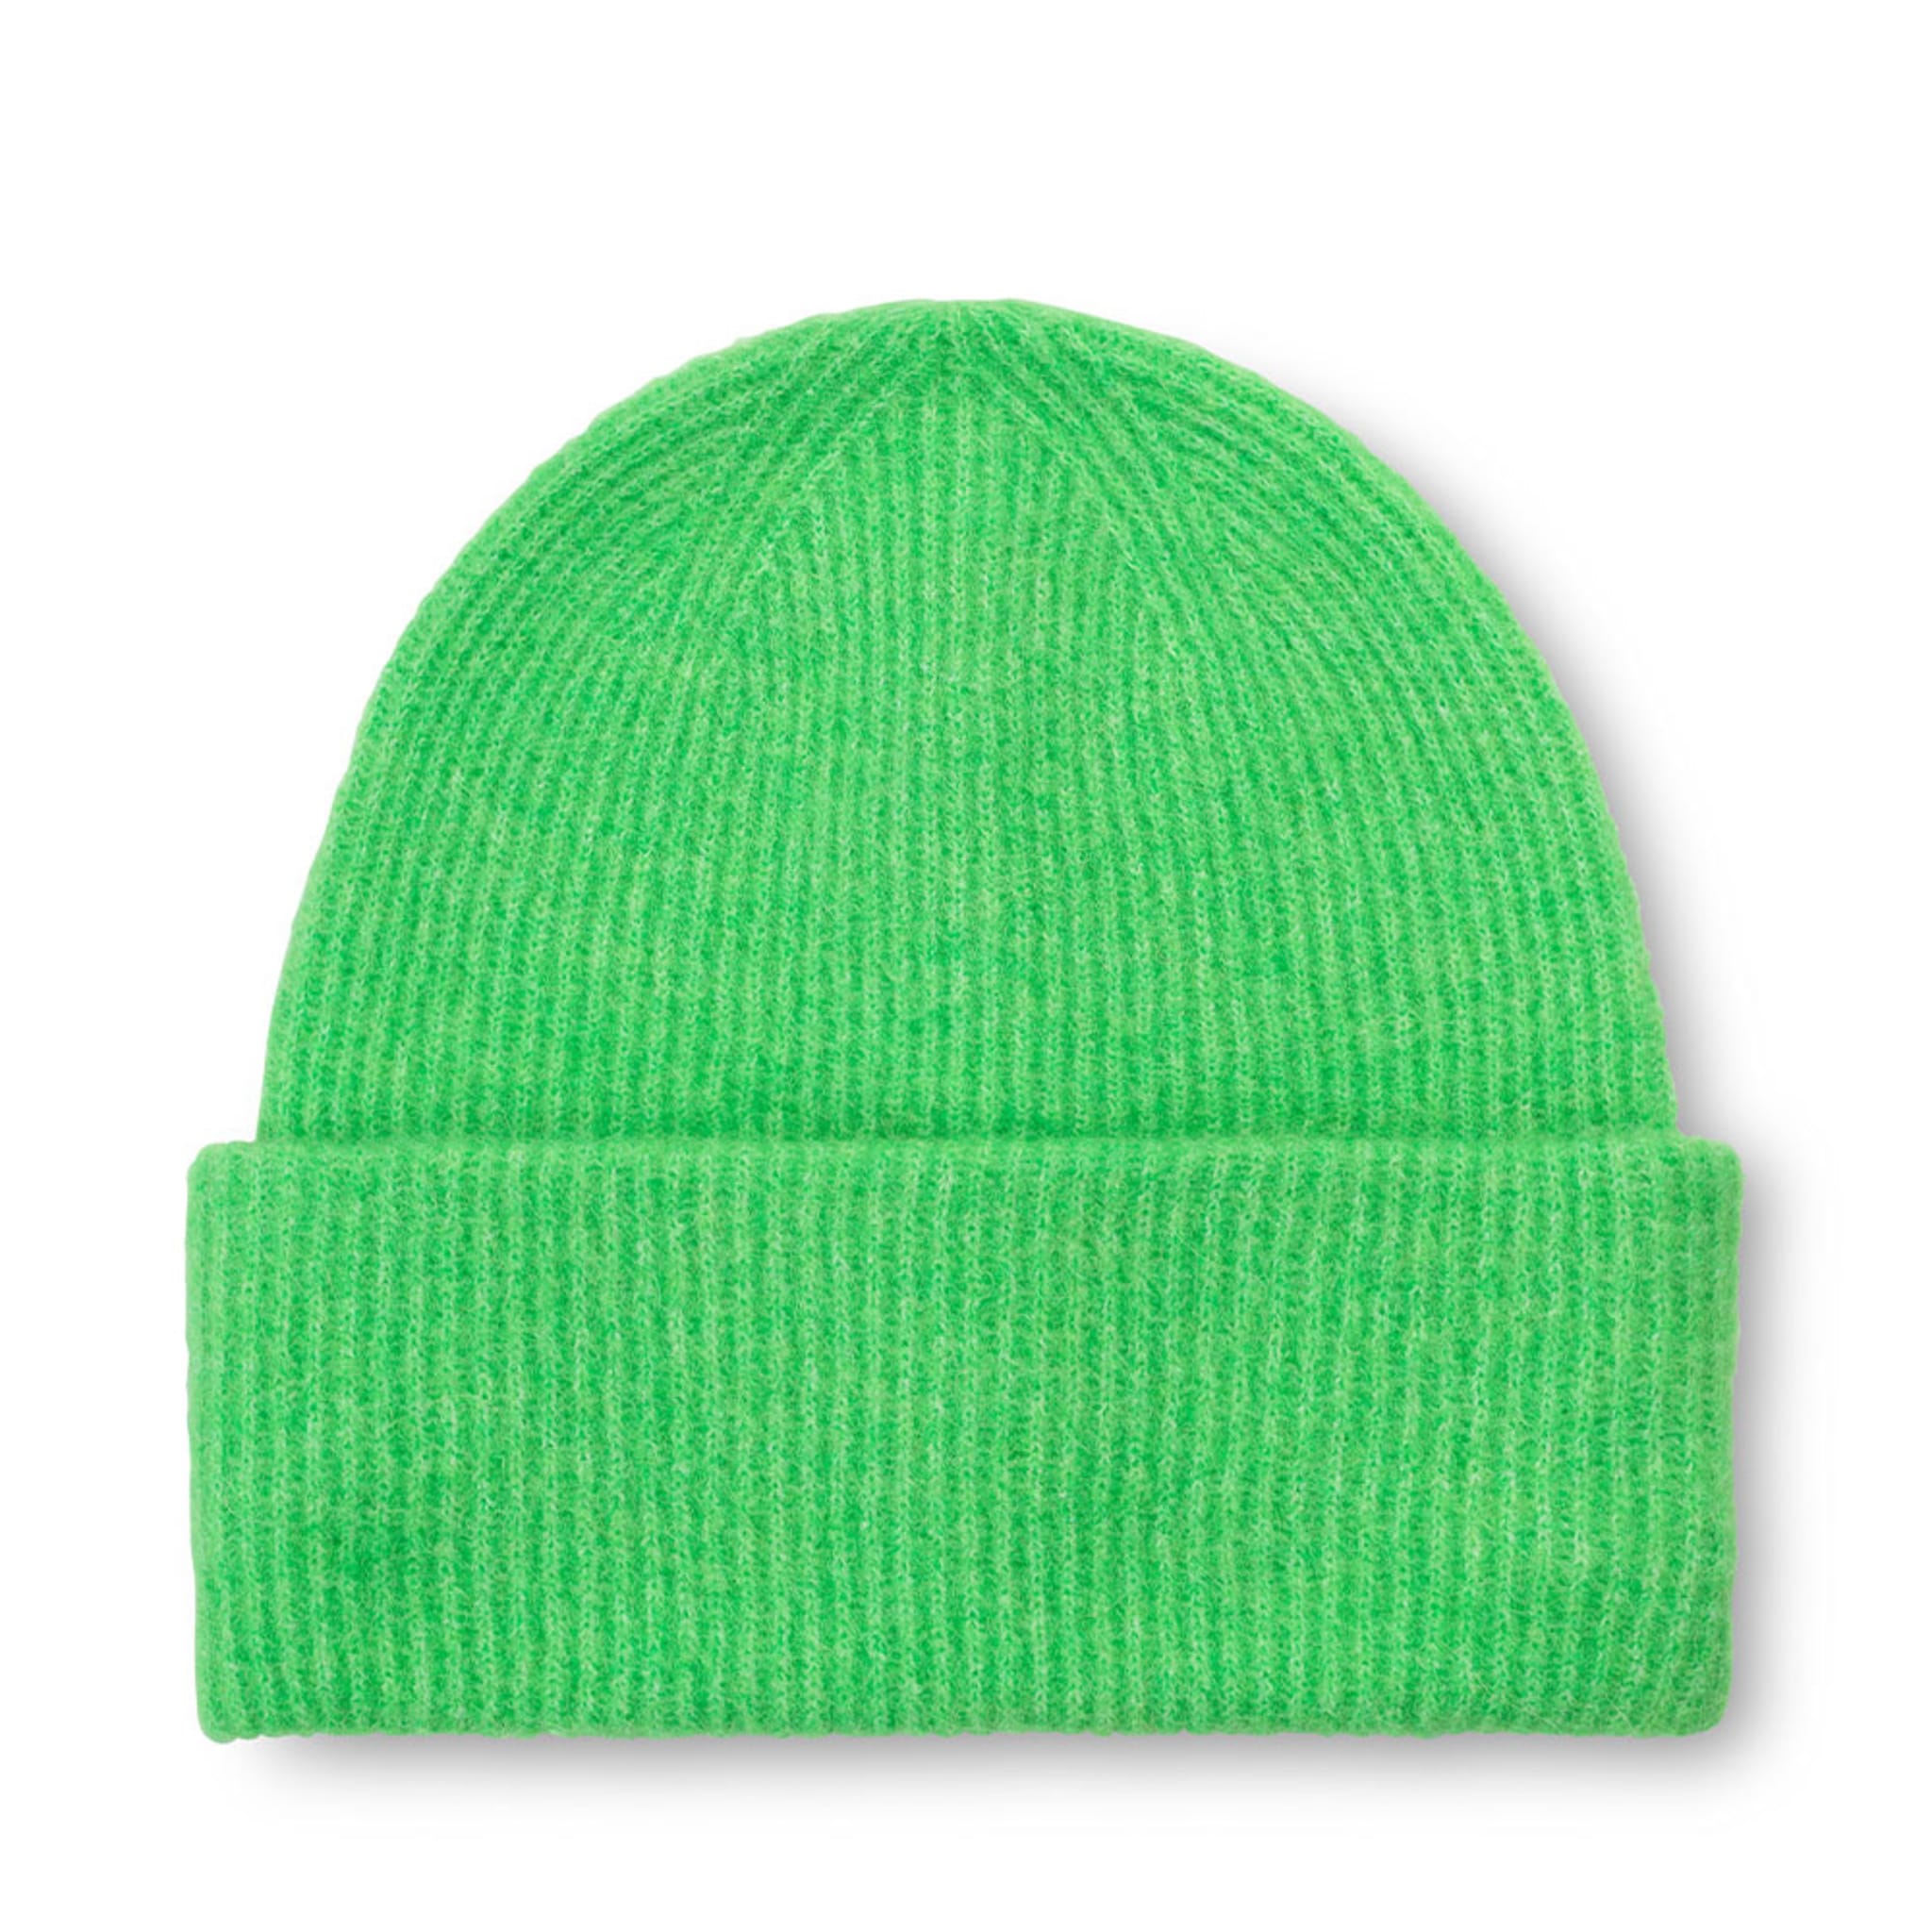 Nor hat 7355, Vibrant Green